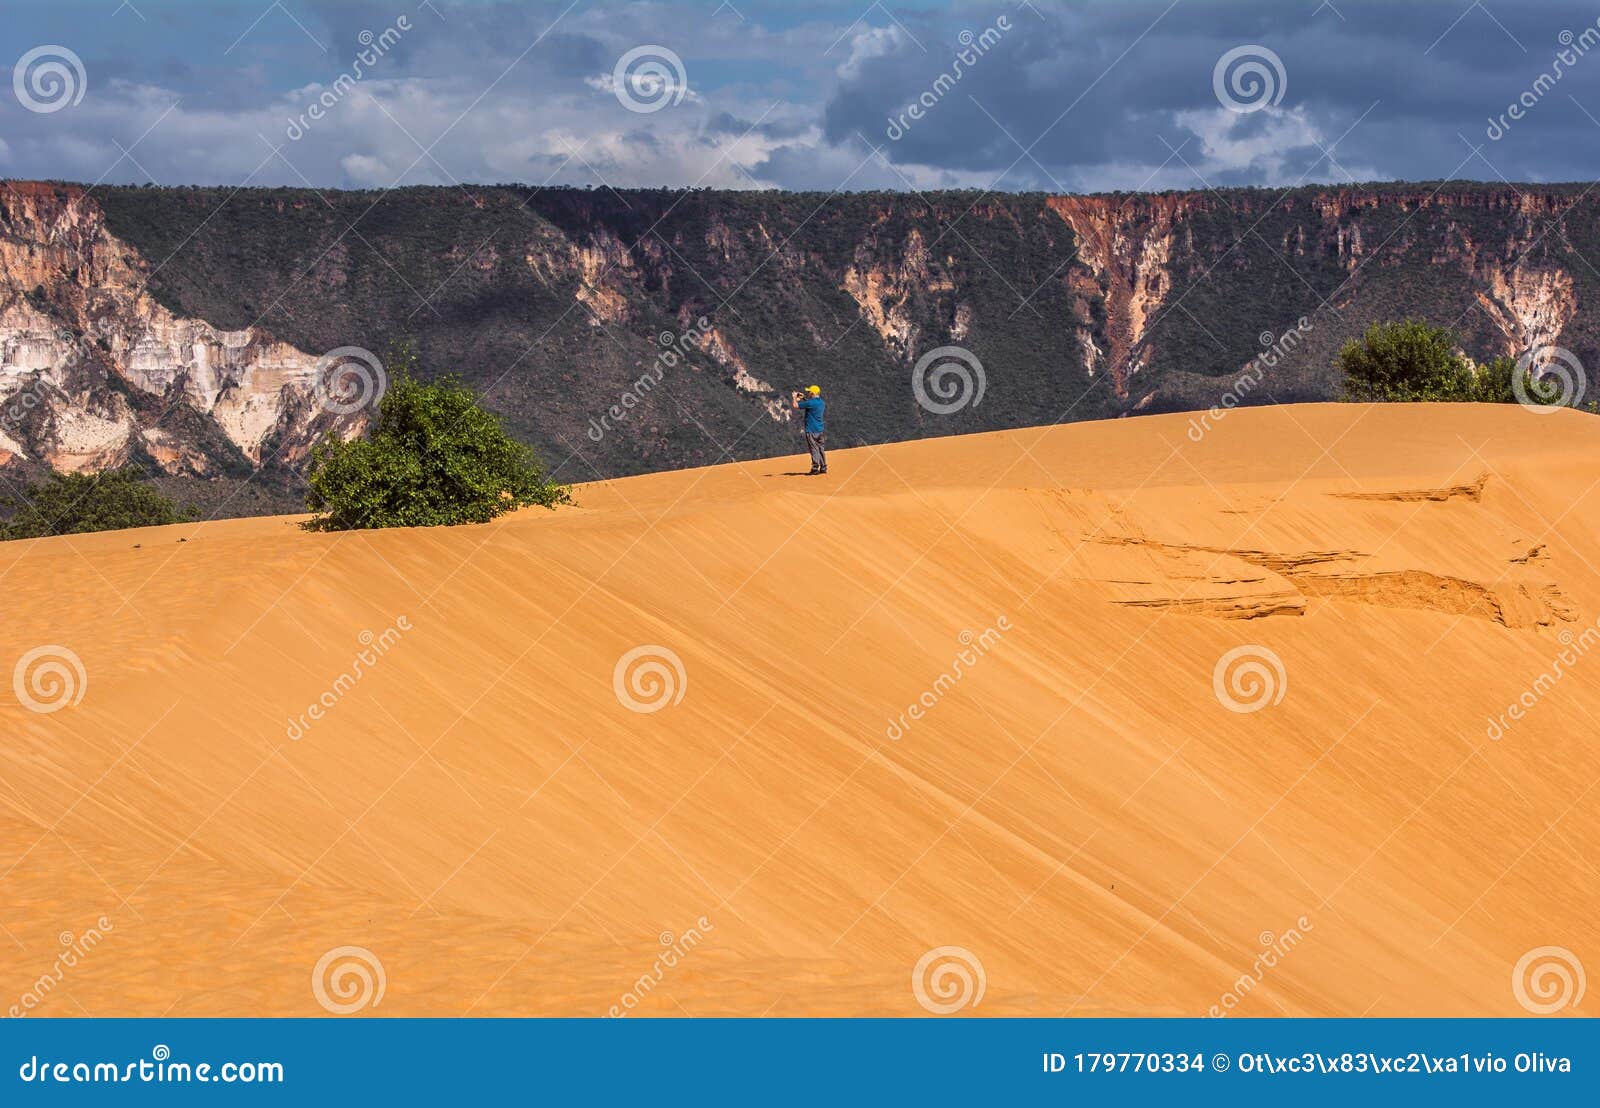 jalapao sand dunes, with espirito santo mountain range in the back. dunas do jalapao com serra do espirito santo ao fundo